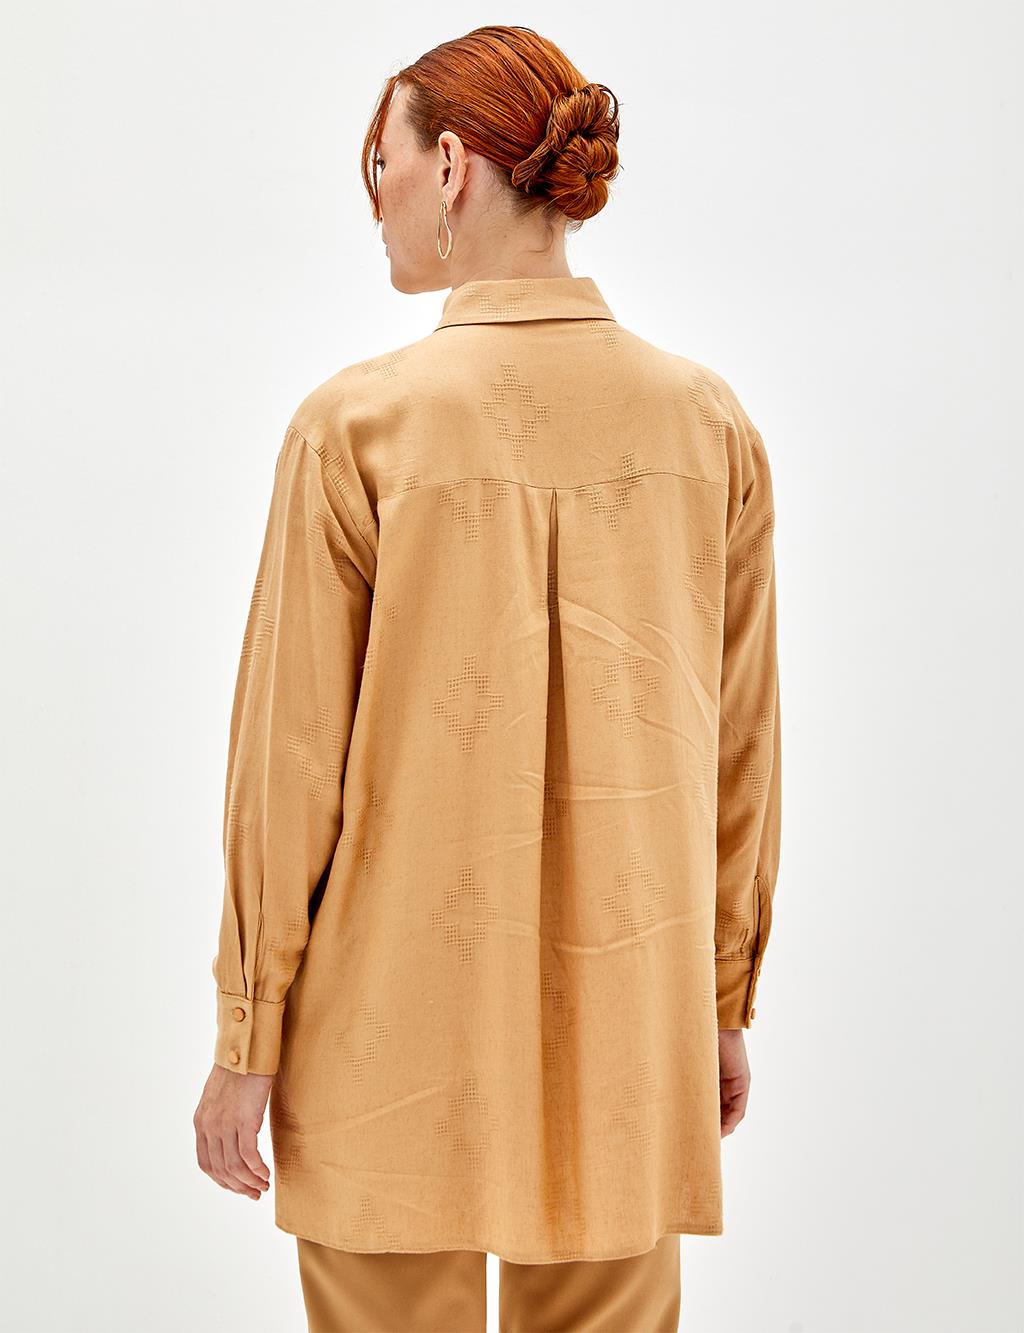 Pocket Stone Embroidered Shirt Beige